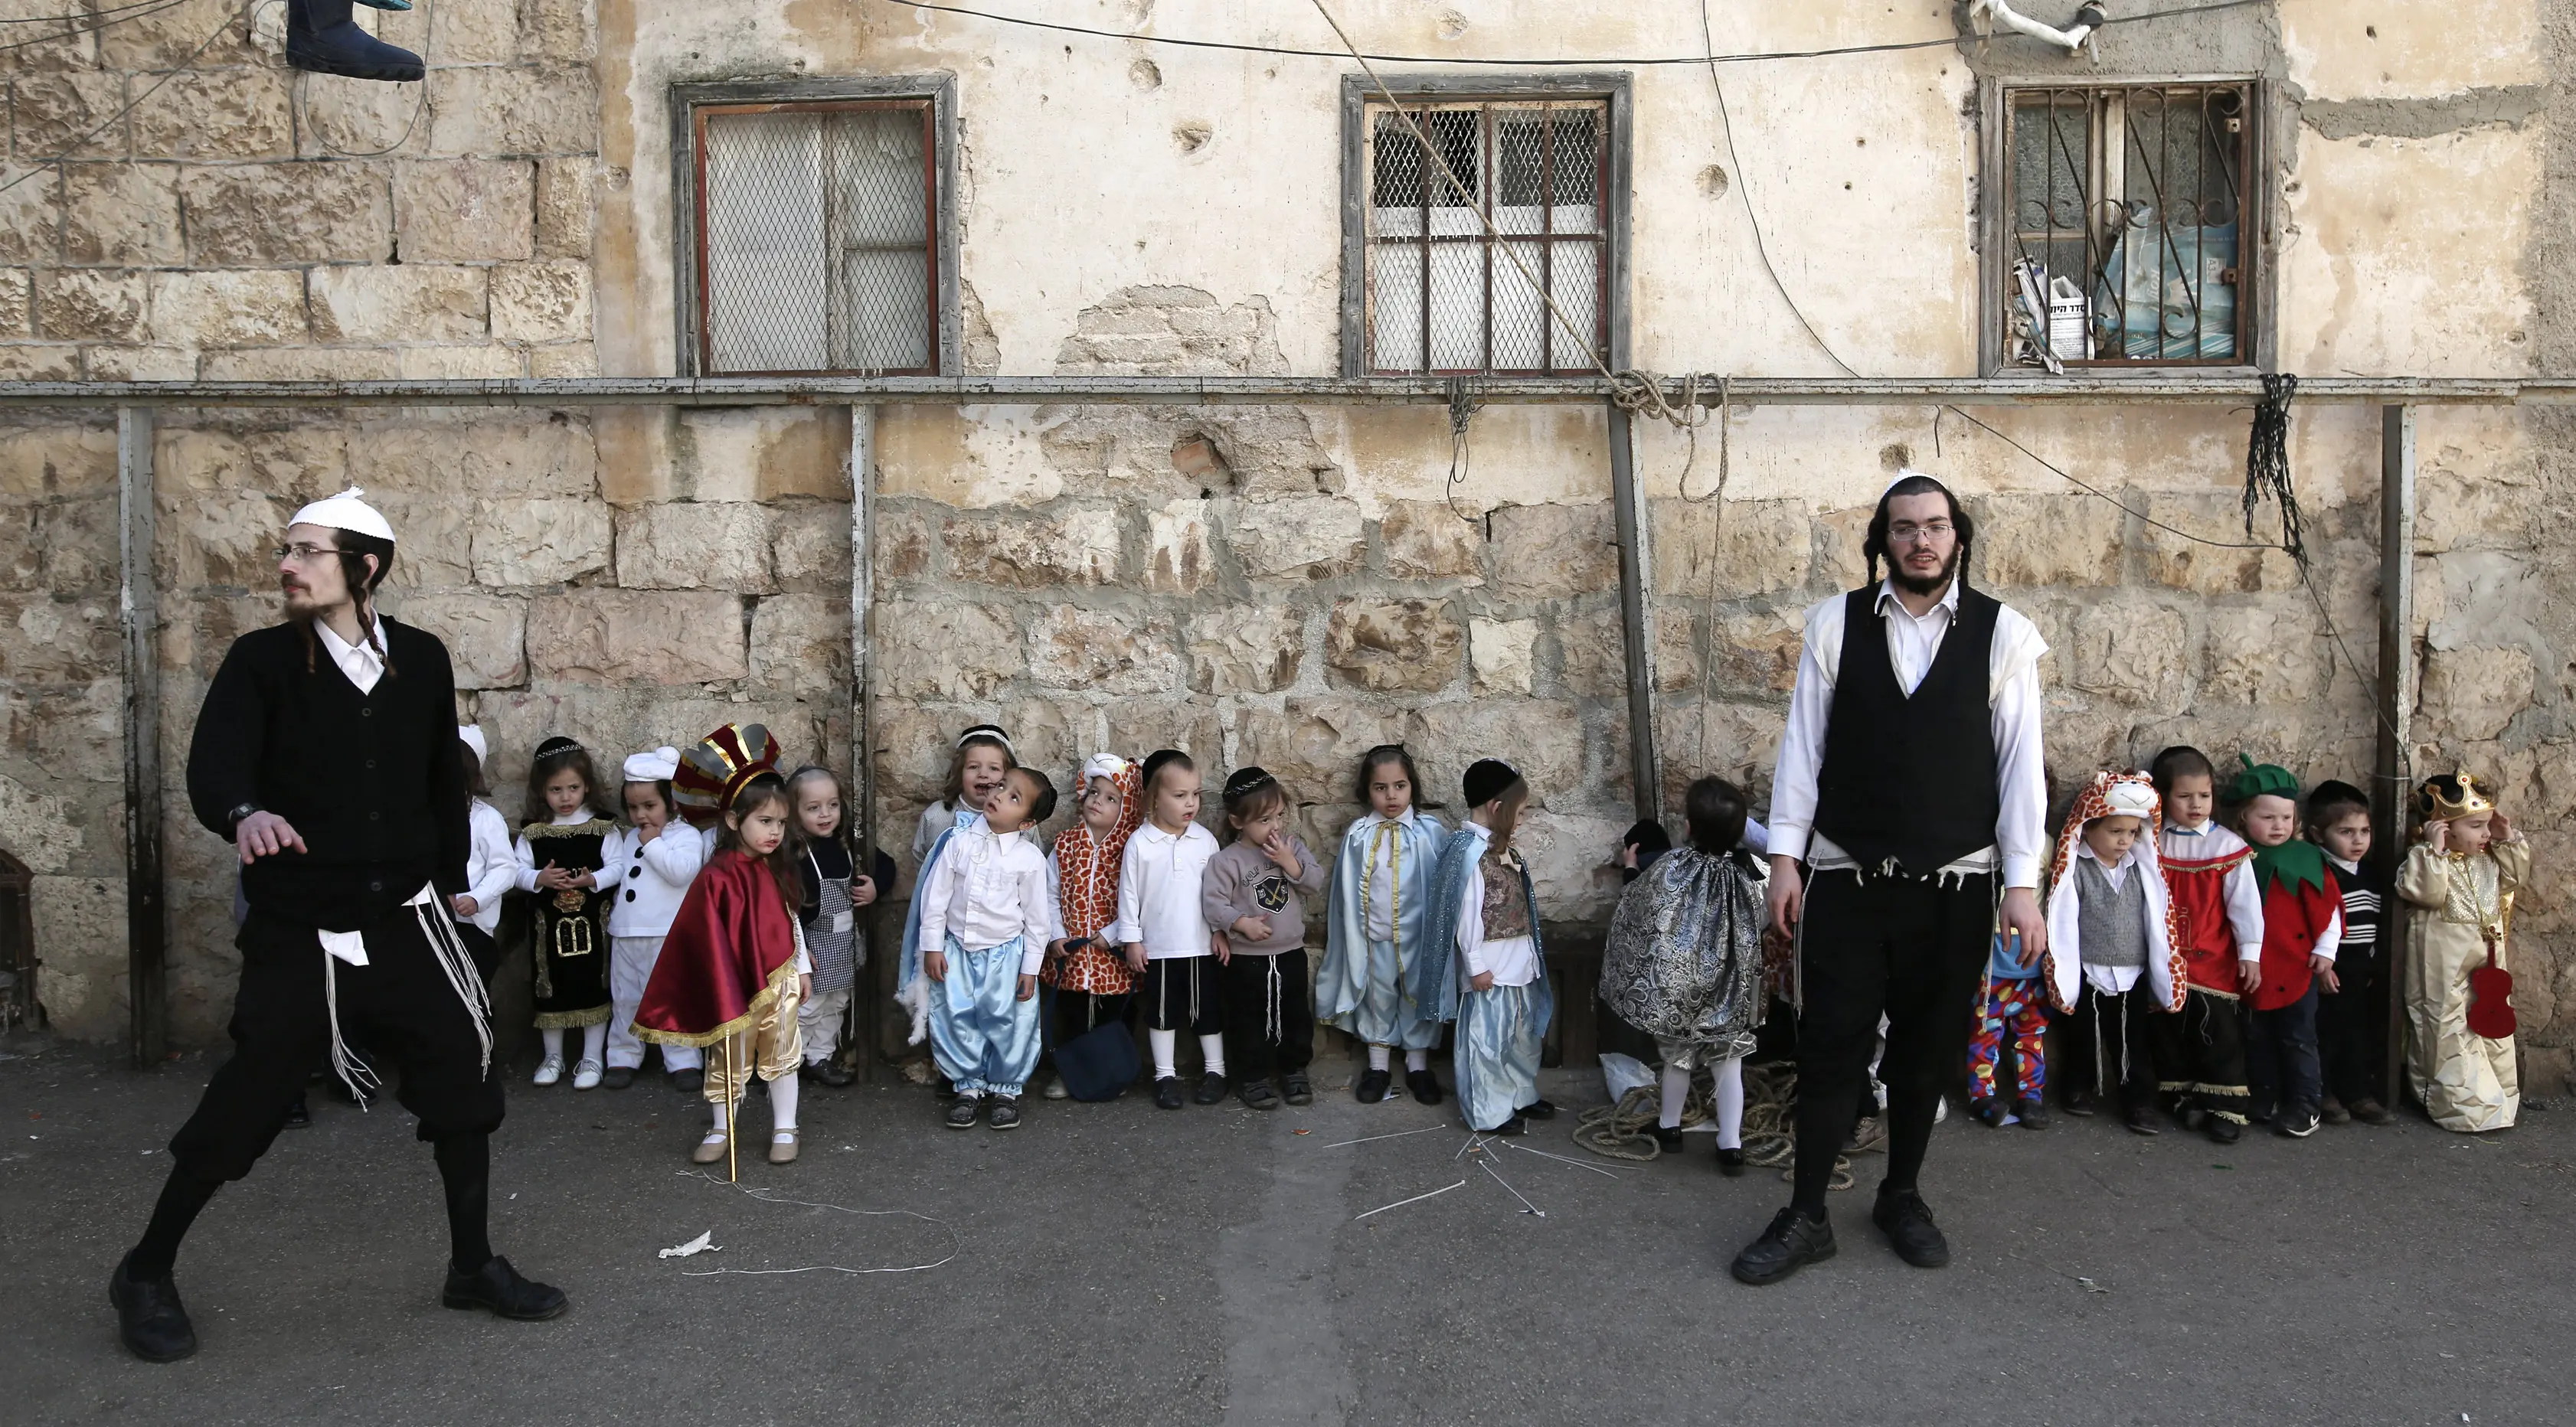 Sejumlah anak-anak Yahudi ultra-Ortodoks mengenakan kostum lengkap dengan atributnya bersiap mengikuti perayaan purim di Yerusalem (8/3). Purim dirayakan tiap tahun menurut kalender Ibrani oleh kaum Yahudi.  (AFP/Menahem Kahana)